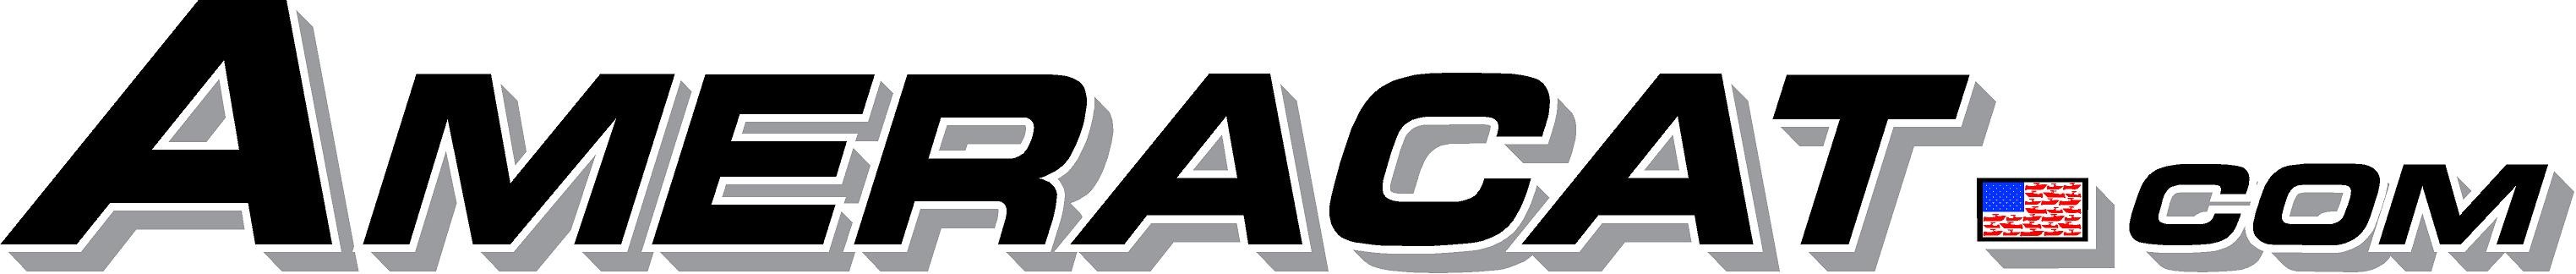 Ameracat logo